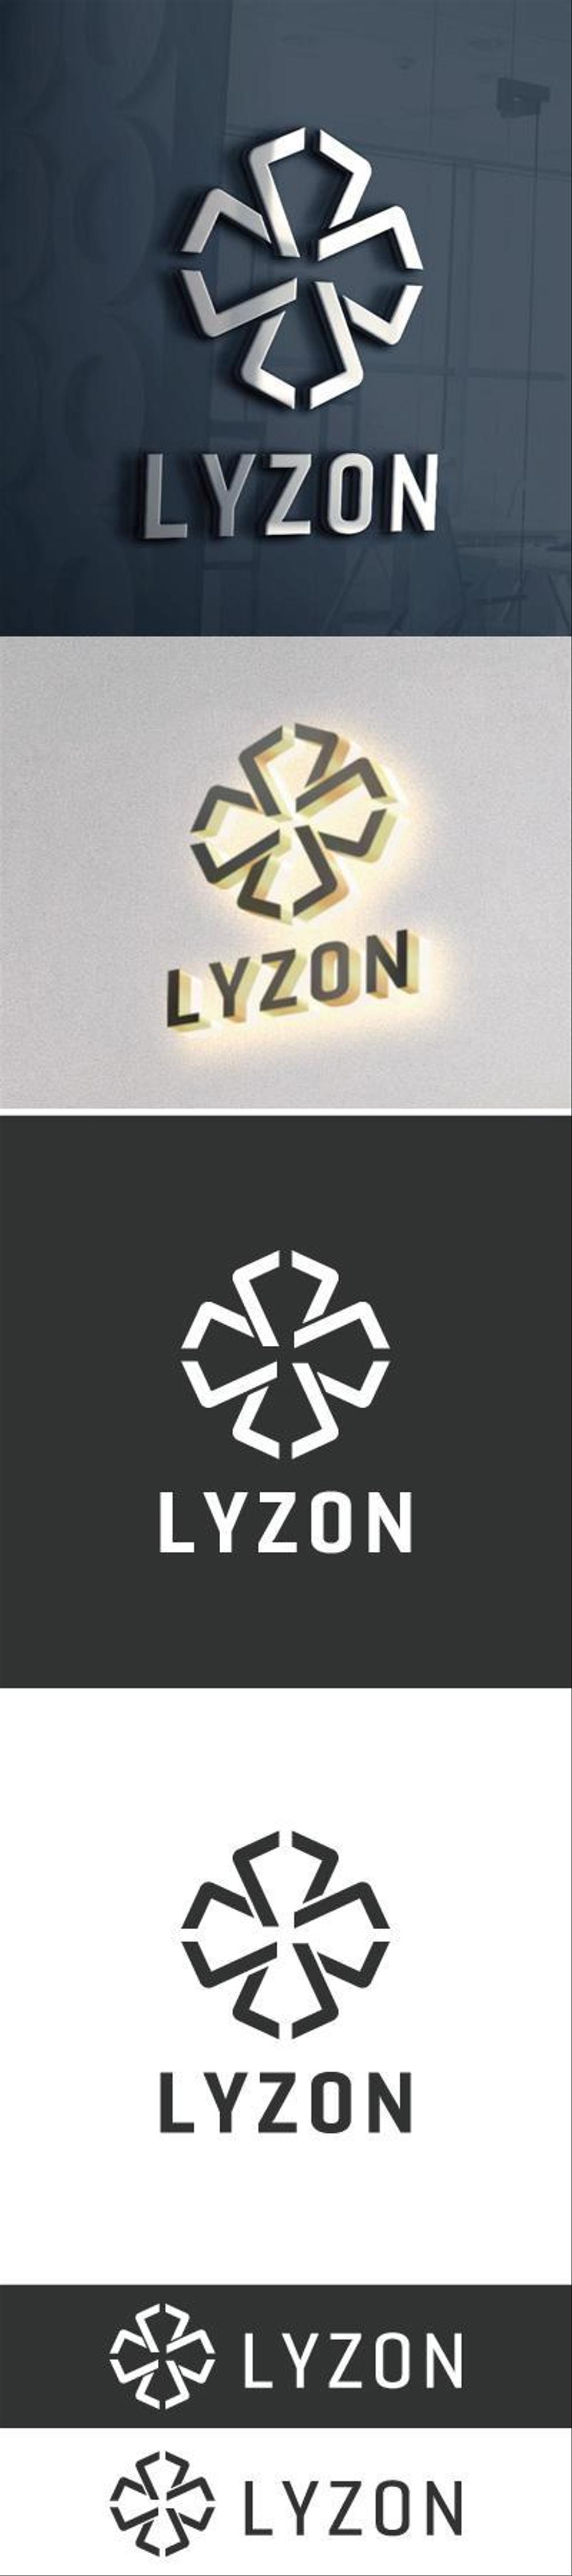 LYZON.jpg